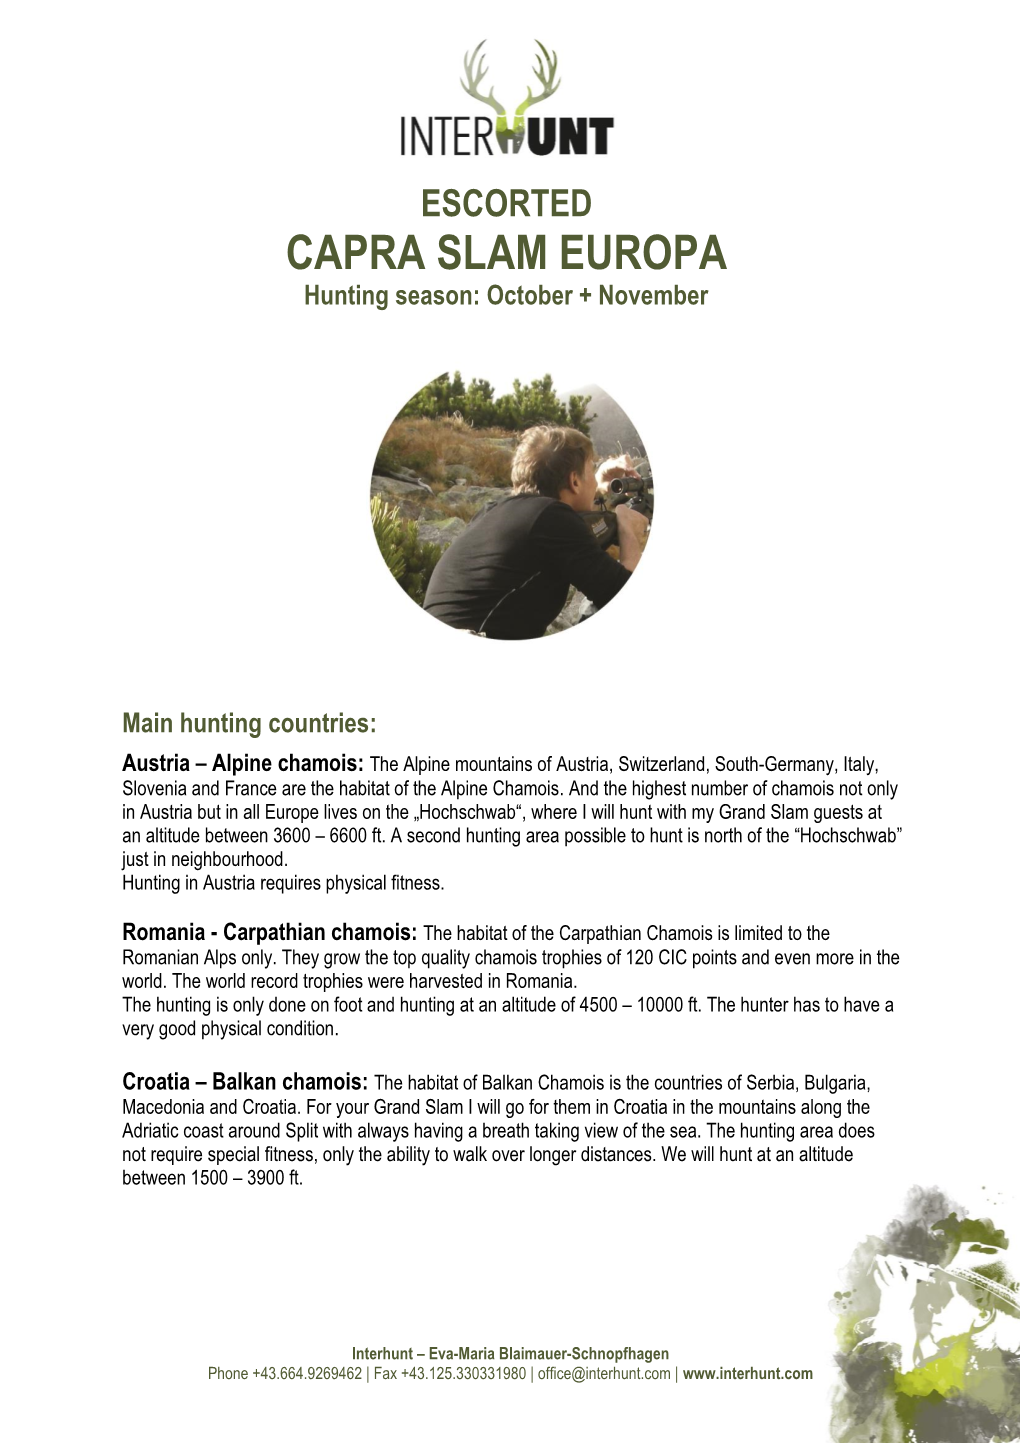 CAPRA SLAM EUROPA Hunting Season: October + November